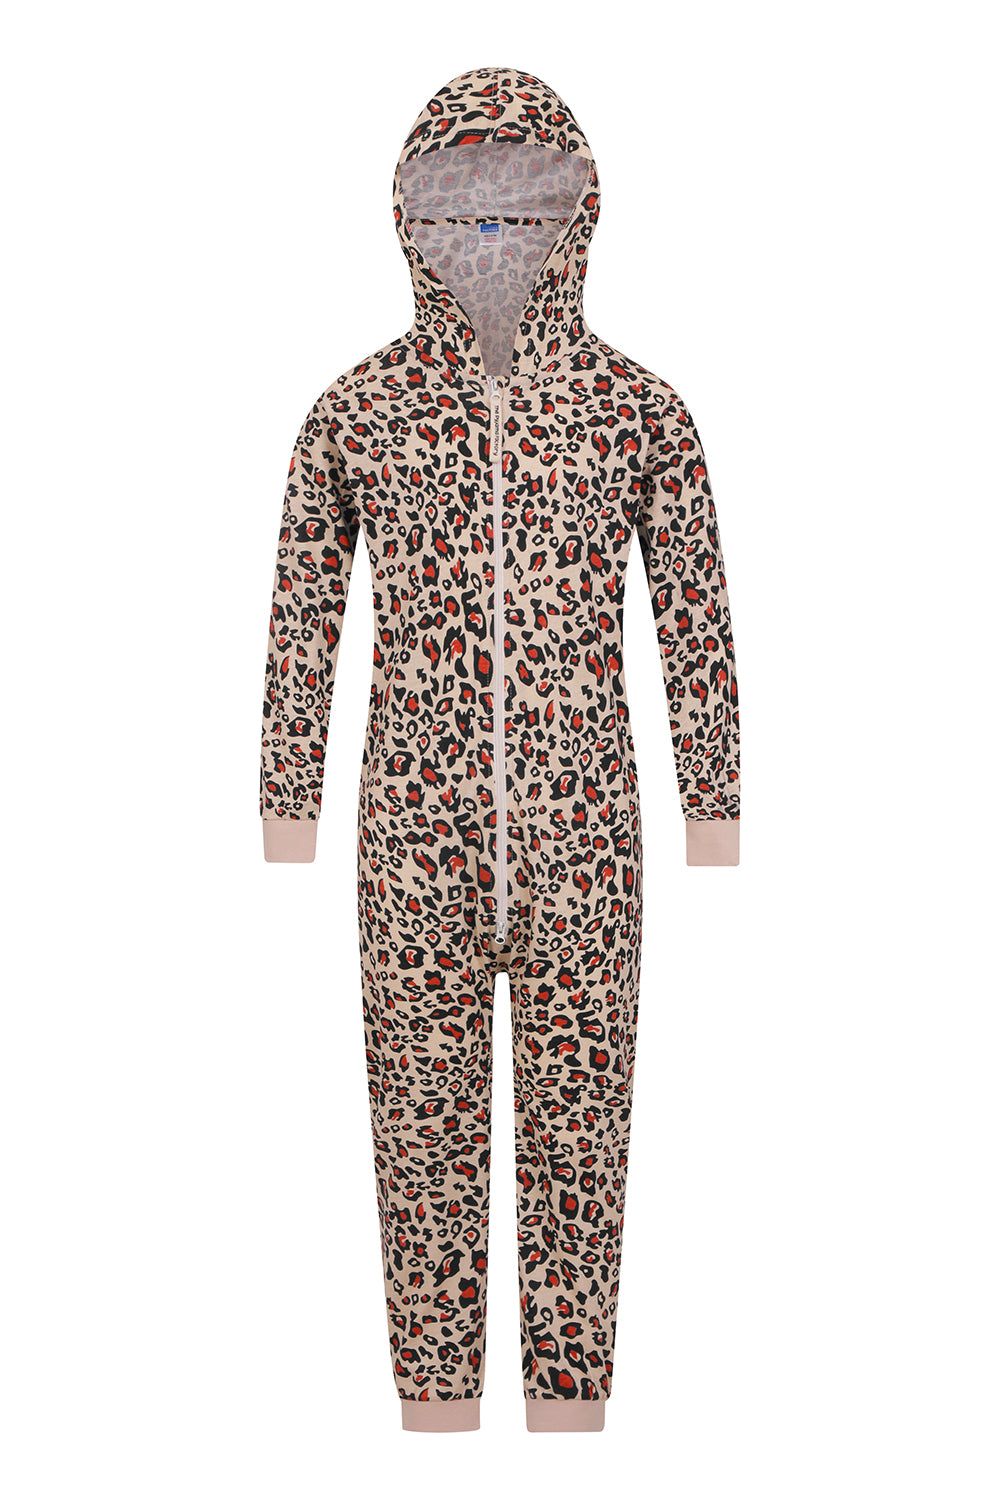 Girls Leopard Long Sleepsuit Cotton